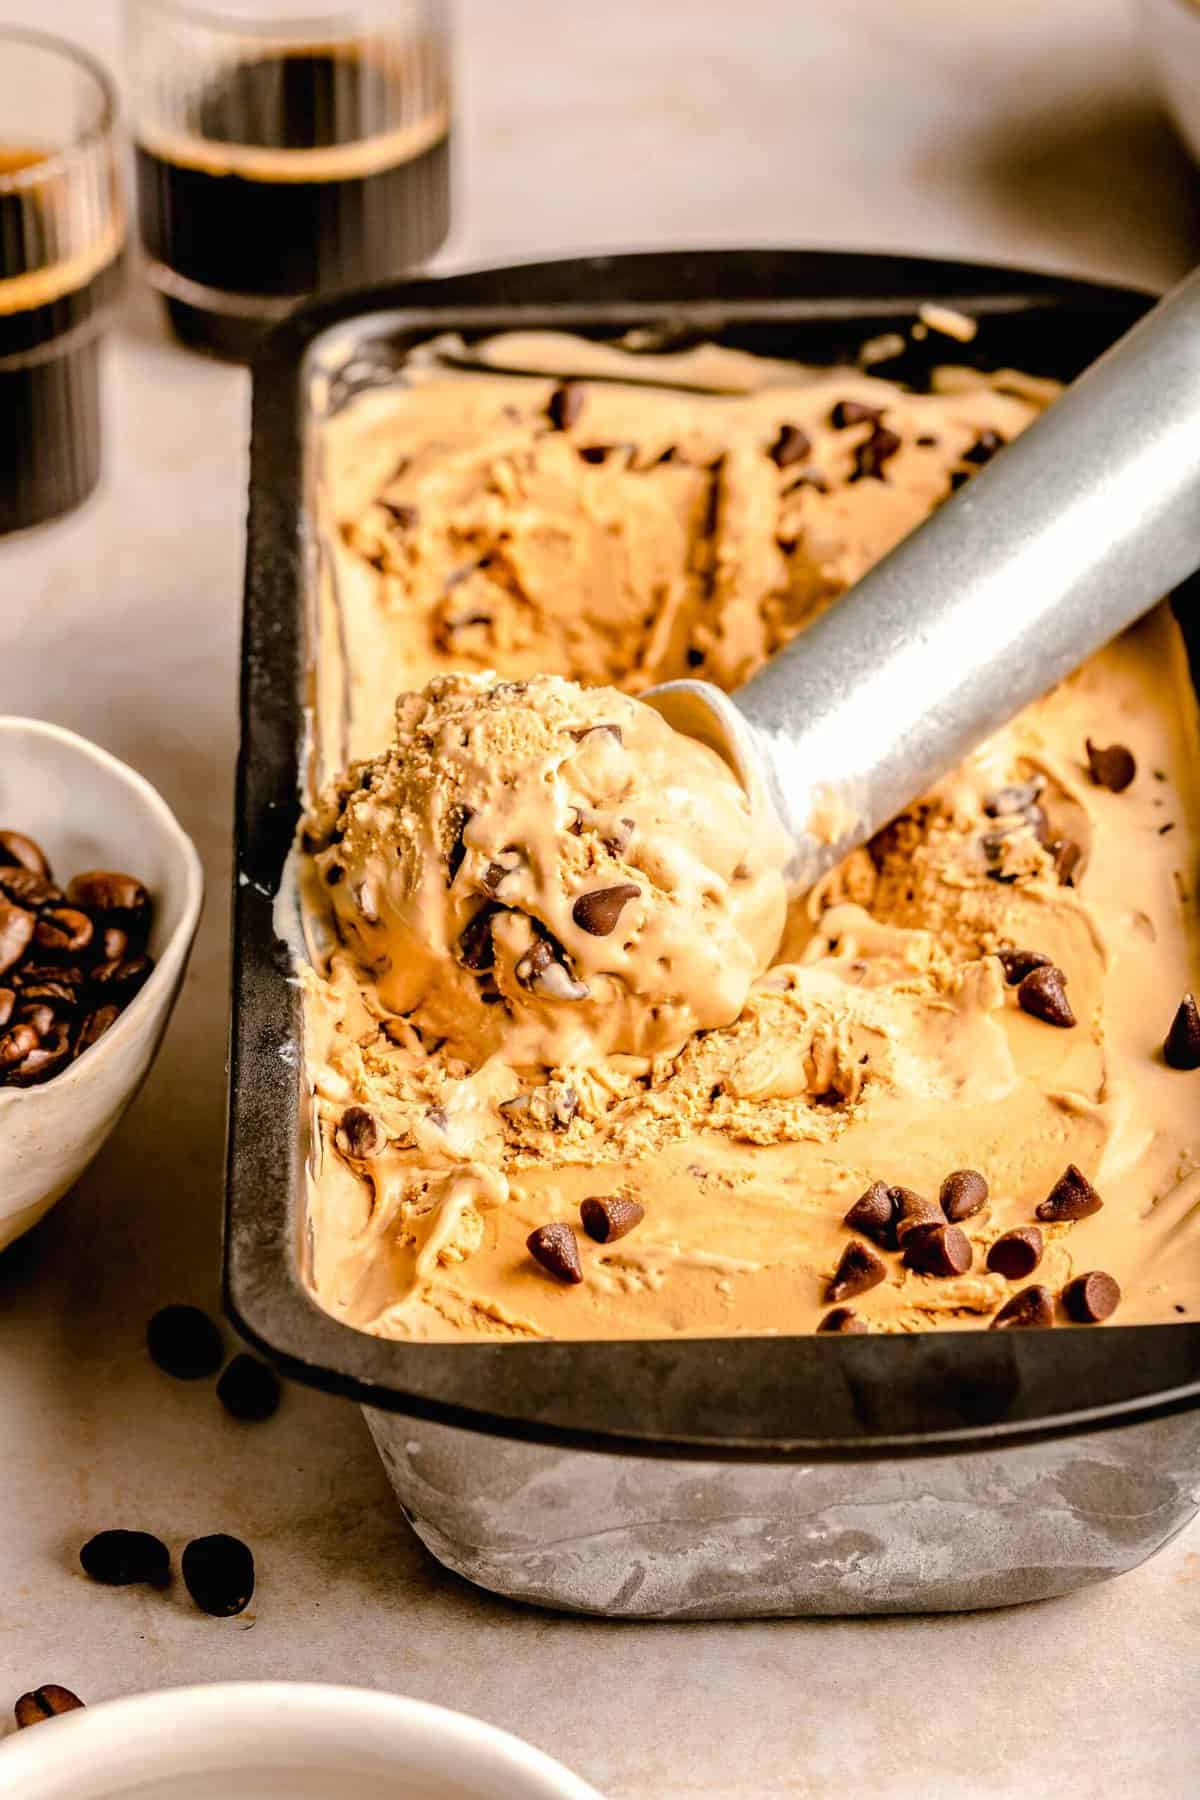 https://www.tablefortwoblog.com/wp-content/uploads/2023/04/espresso-chocolate-chip-ice-cream-recipe-photo-tablefortwoblog-3-scaled.jpg